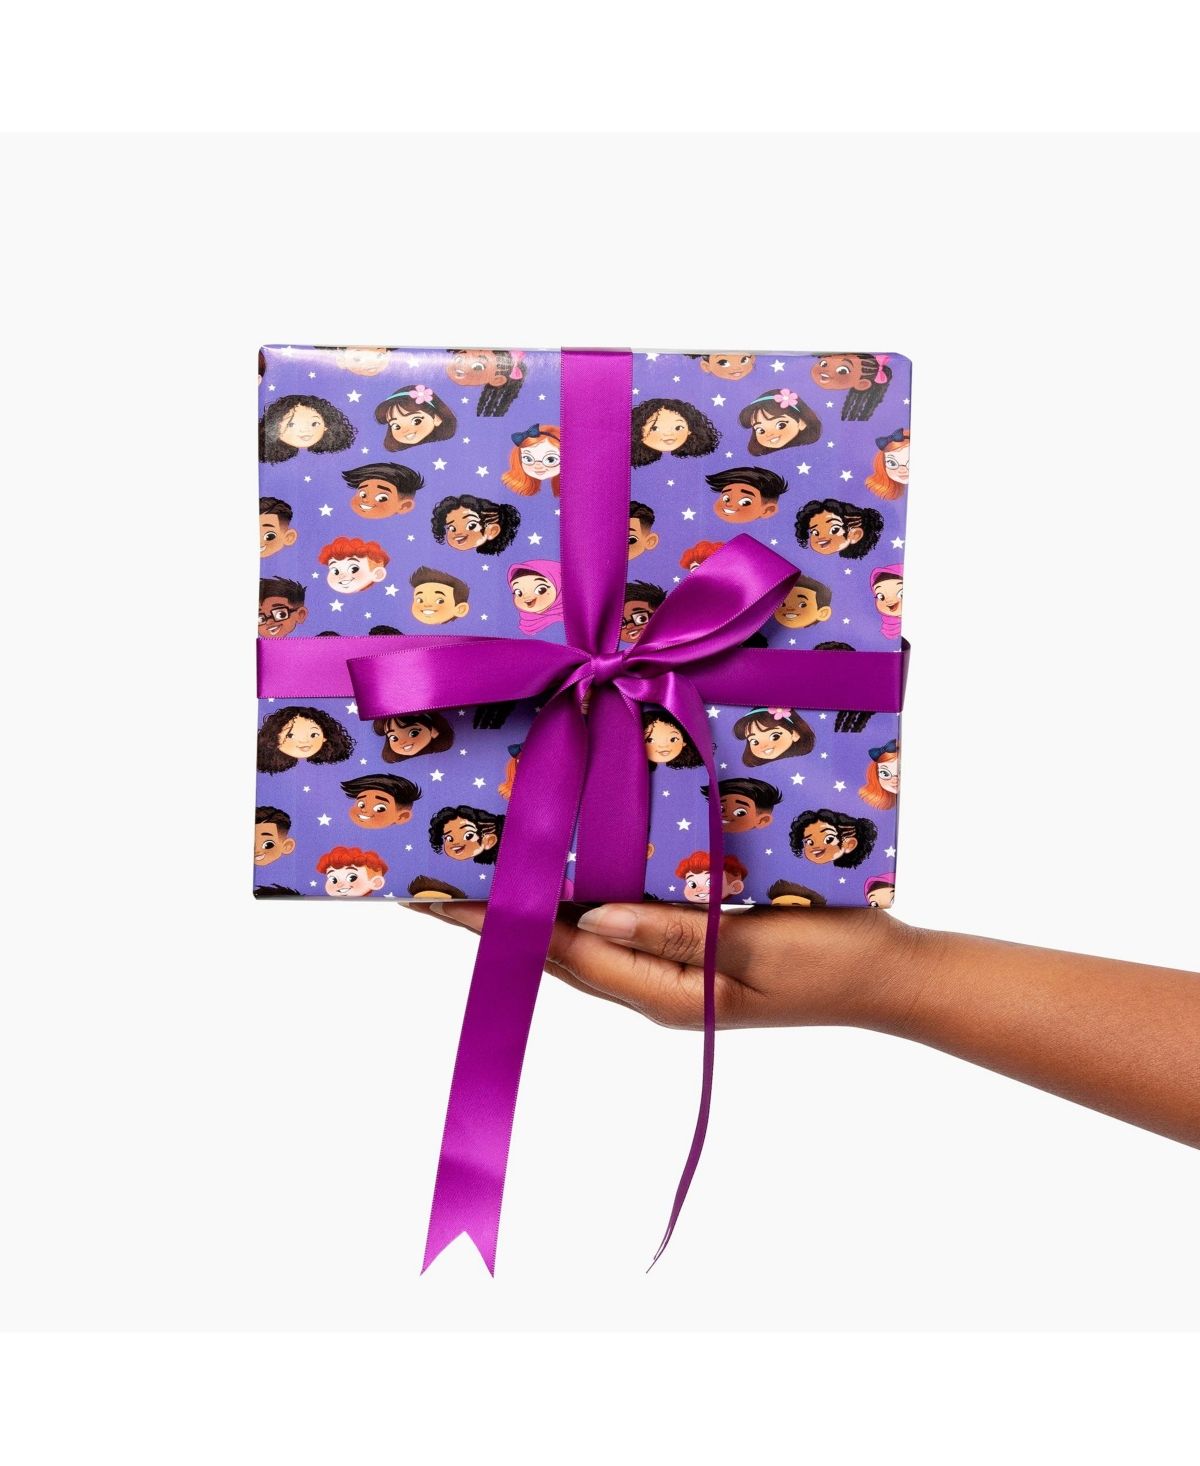 Celebration for Everyone! Gift Wrap | Macys (US)